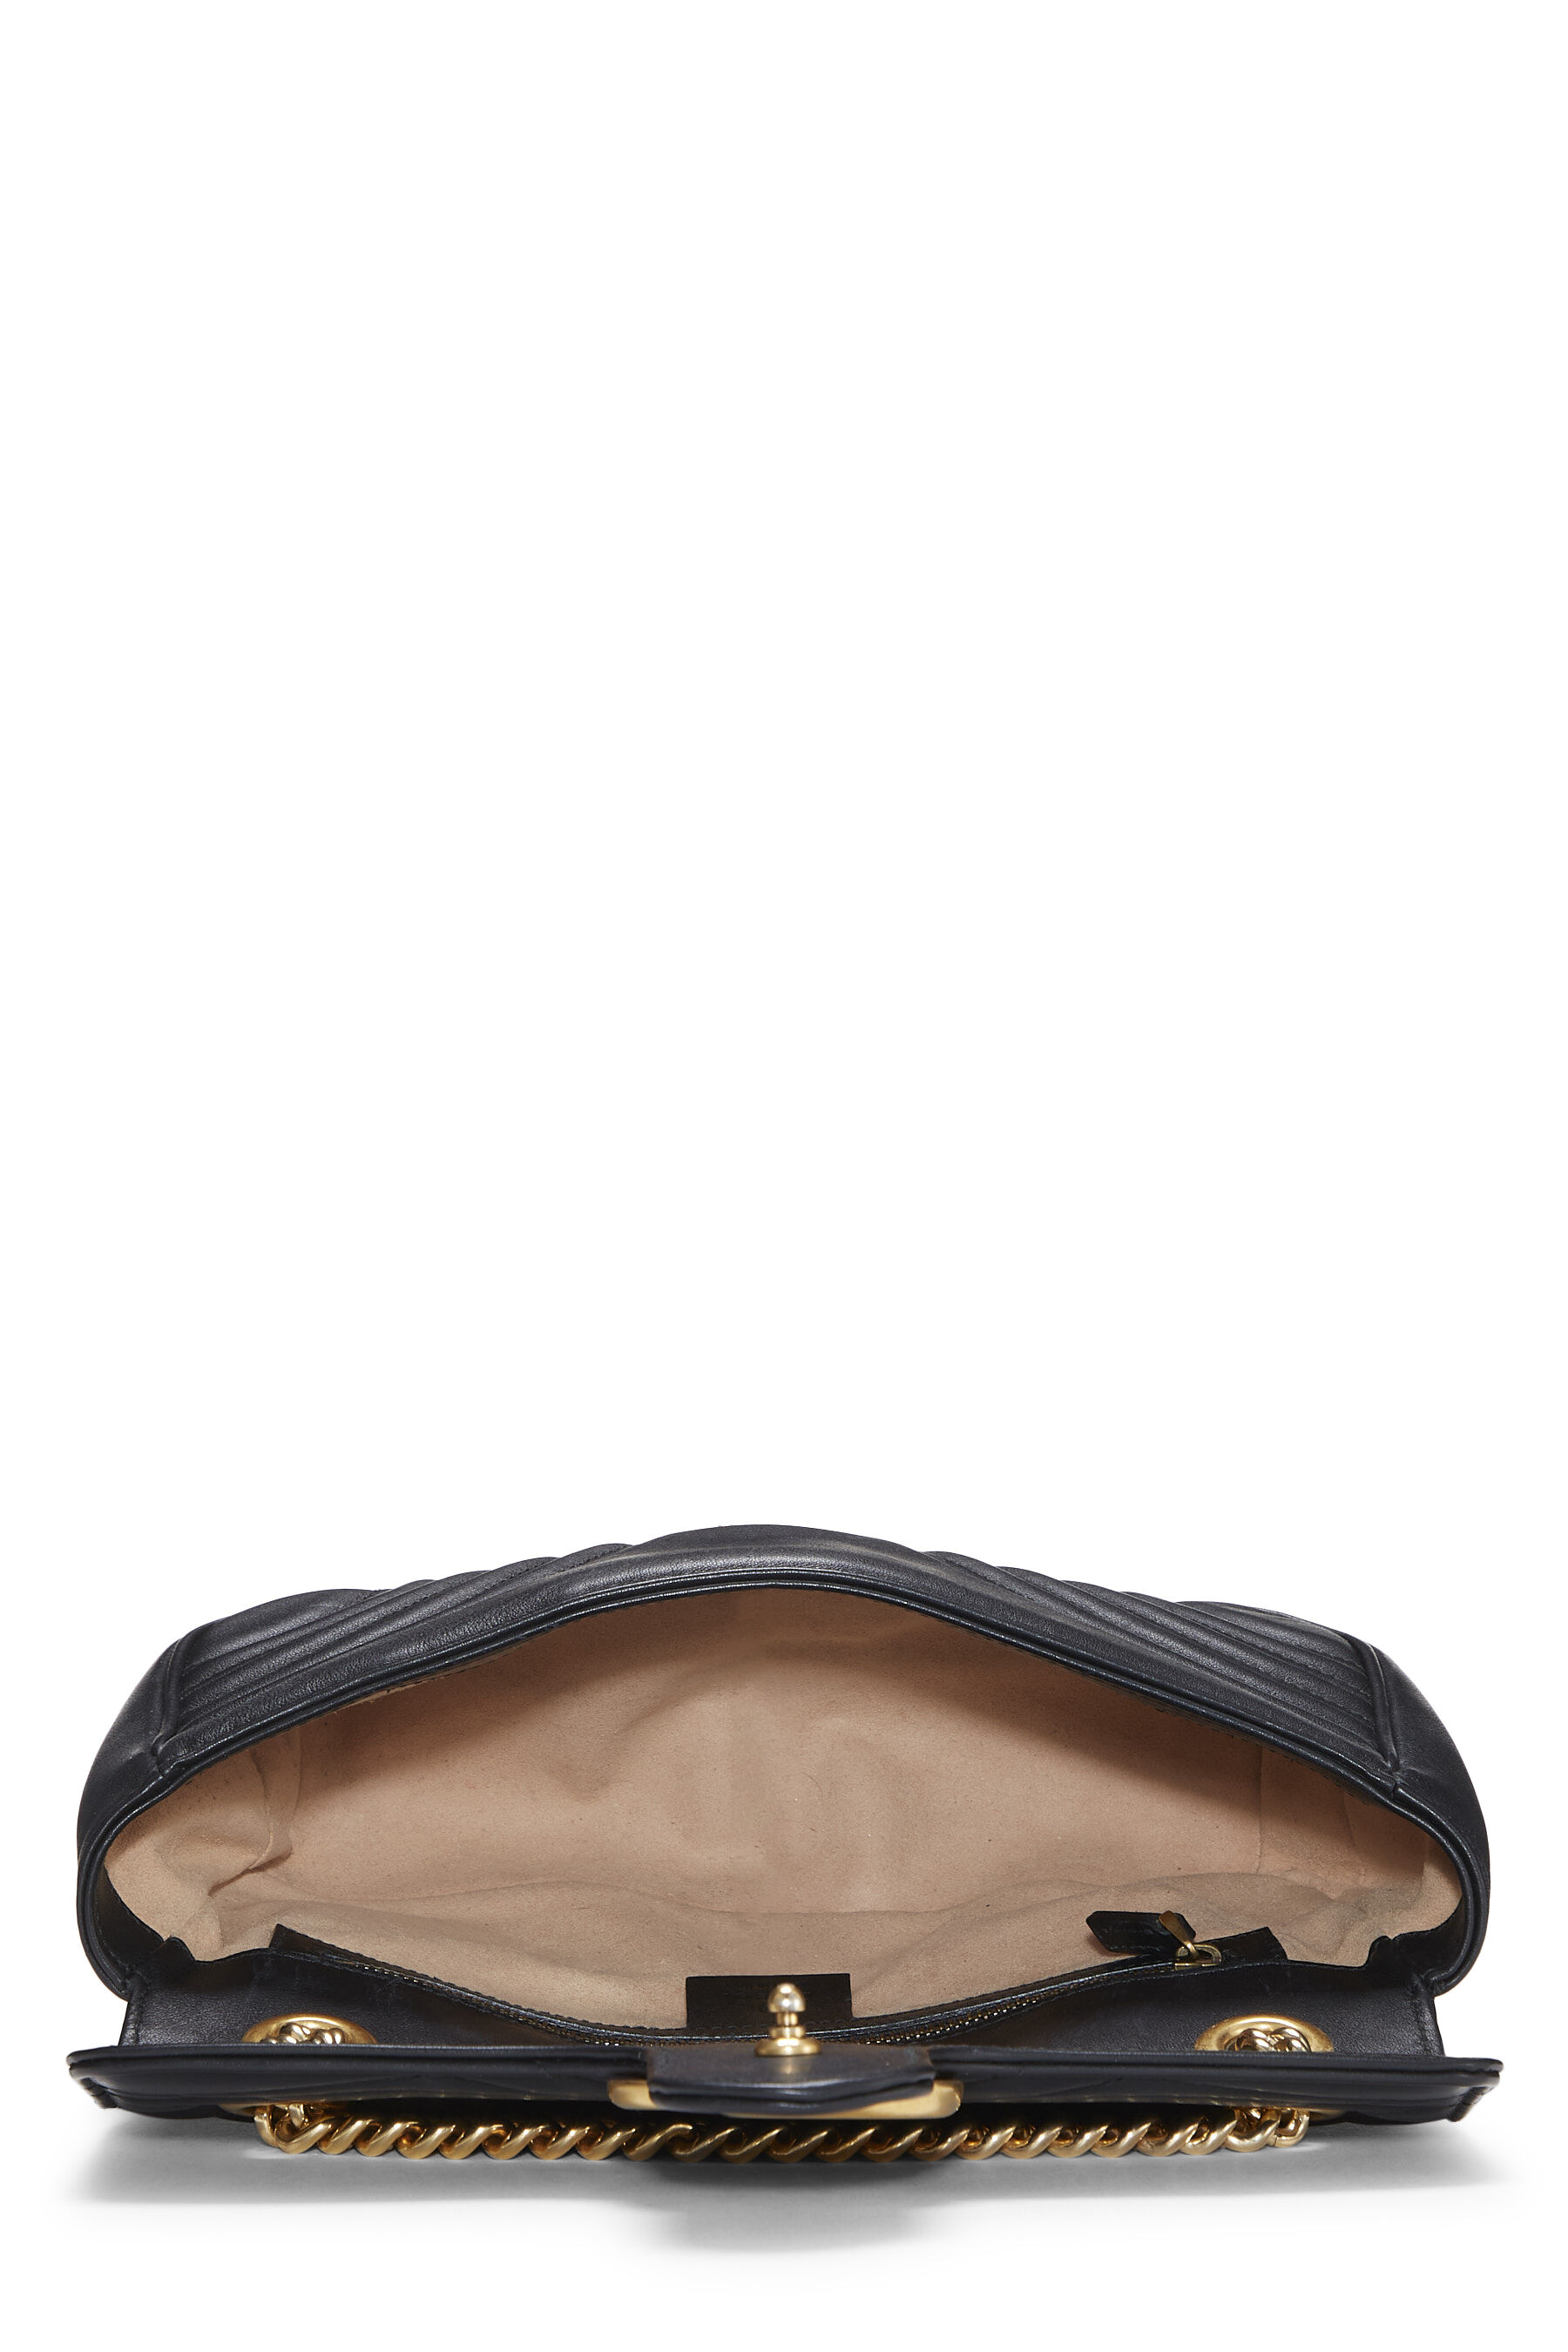 Black Leather GG Marmont Shoulder Bag Small